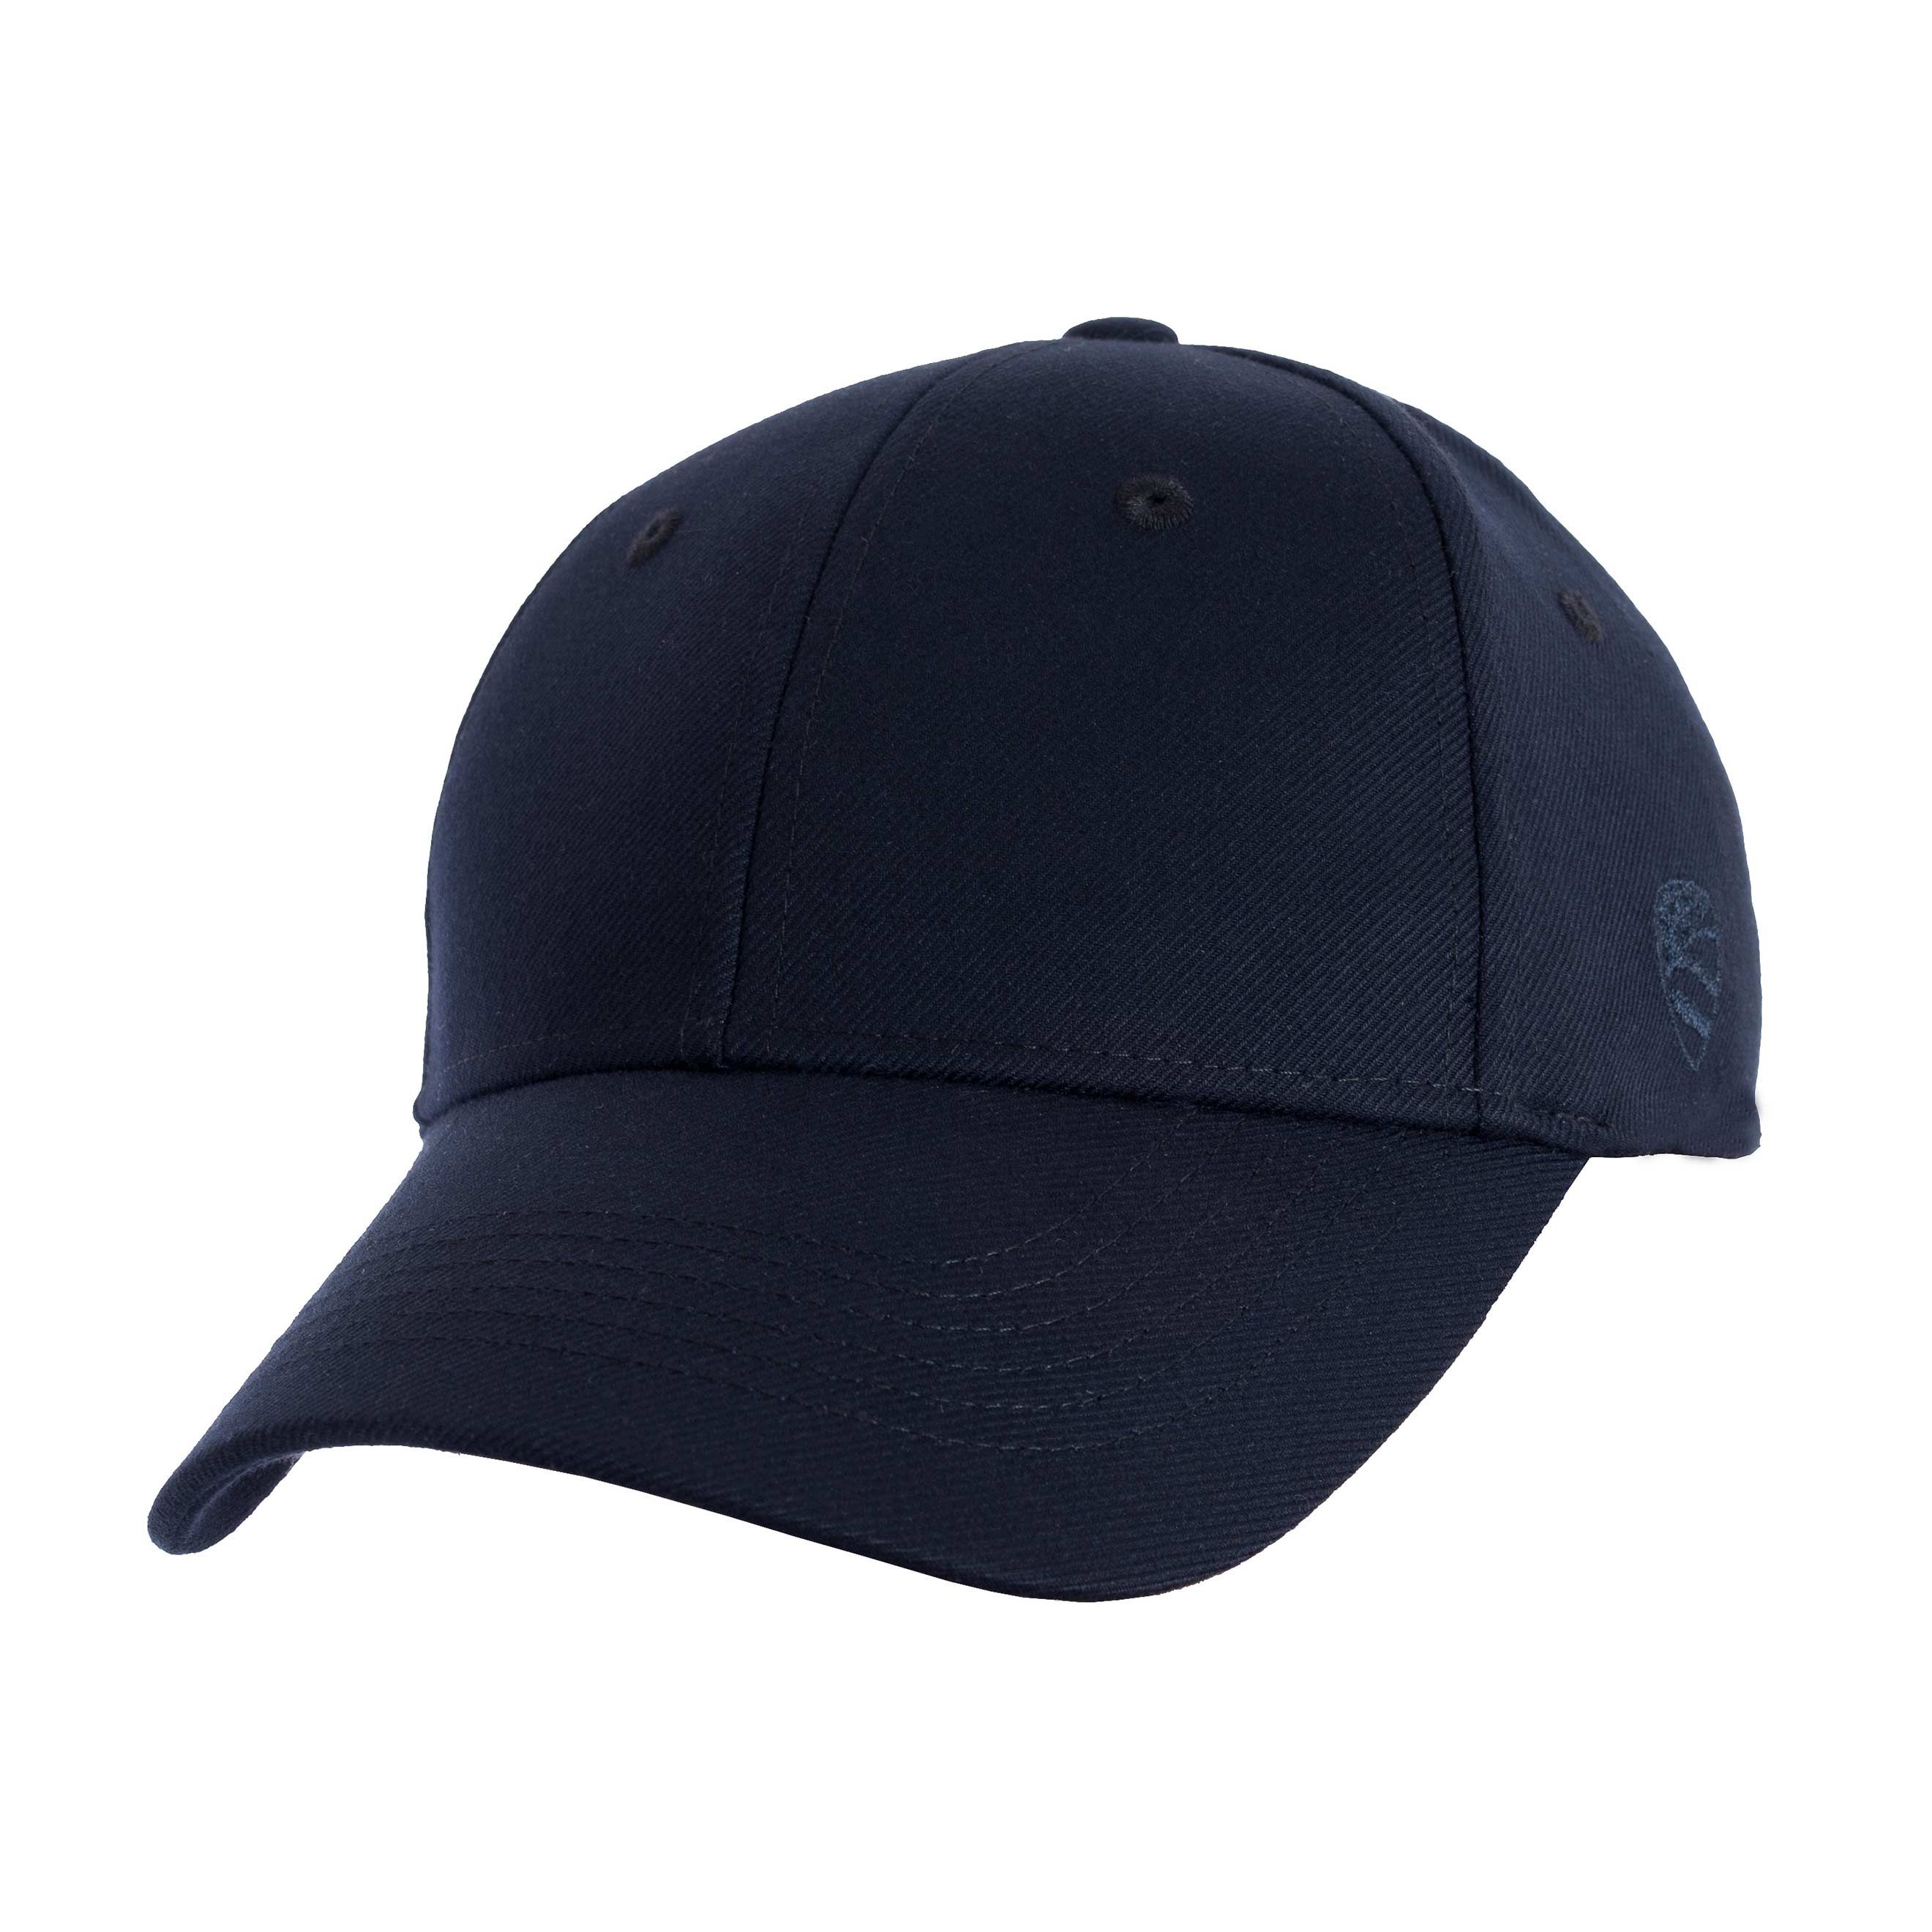 Novasox Black and Blue Large Brim Floral Flat Sun Hat, Size: One